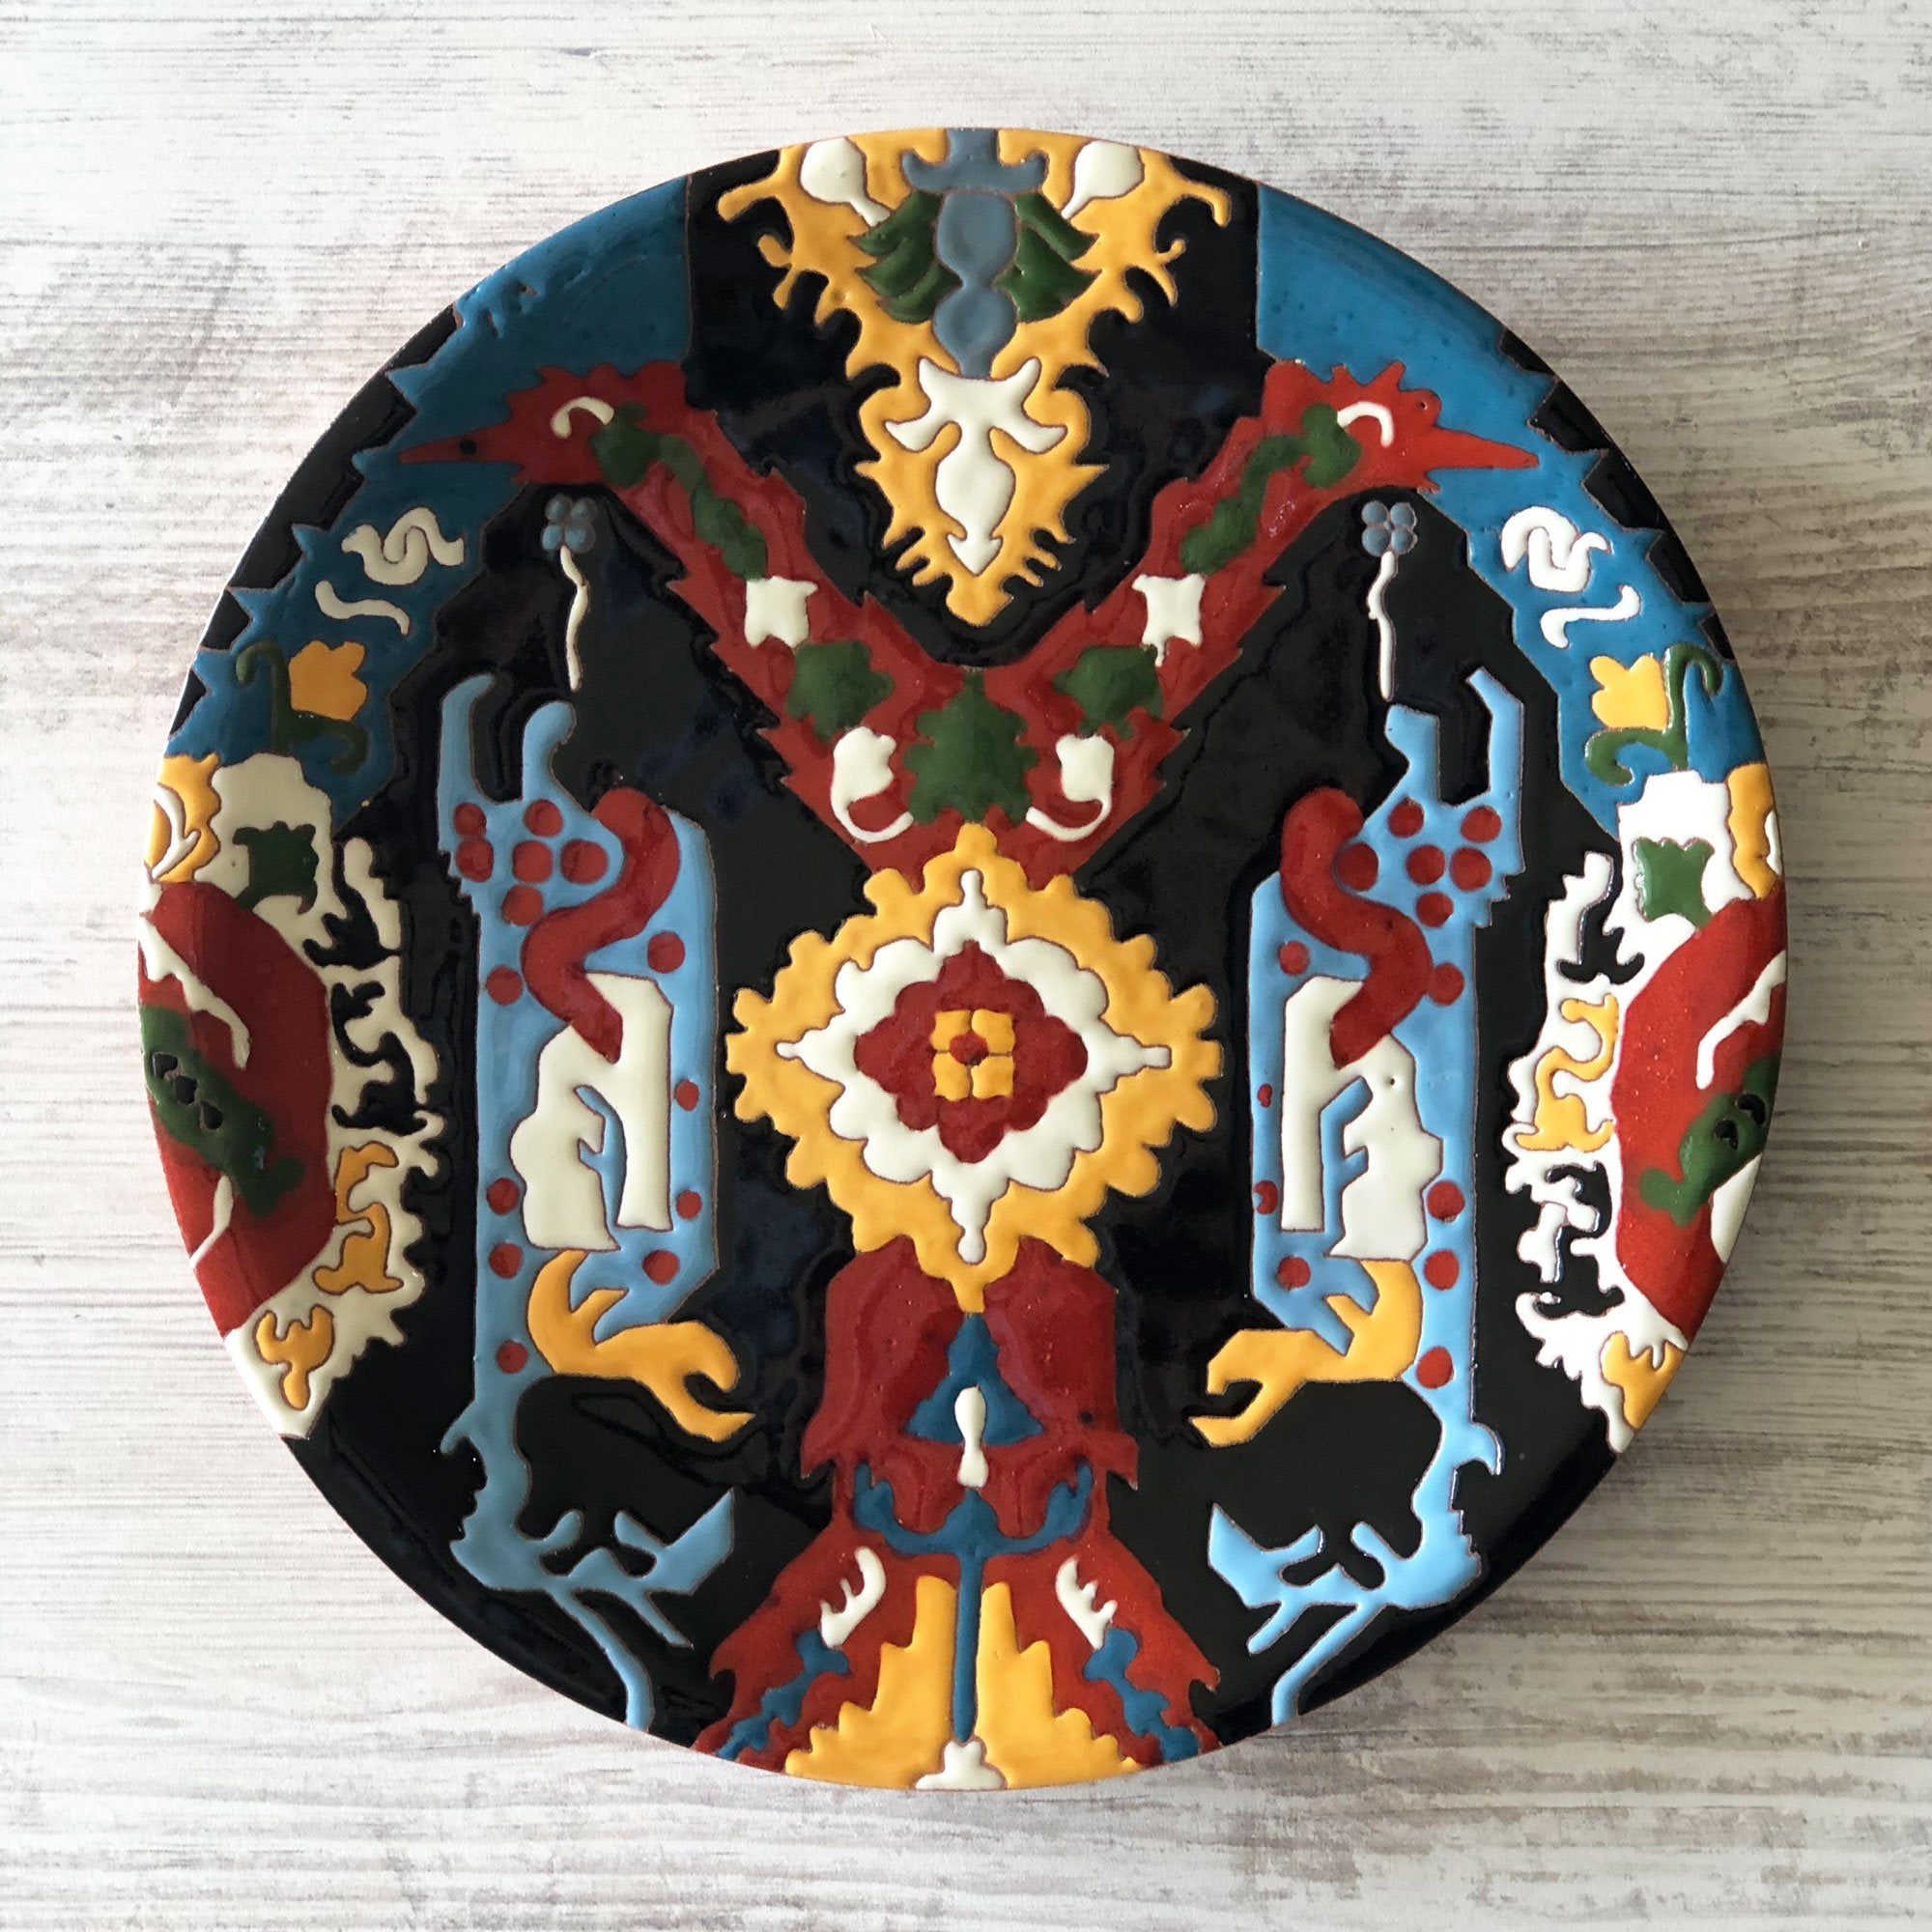 Ceramic Plate with Armenian Carpet Ornaments - Dragon